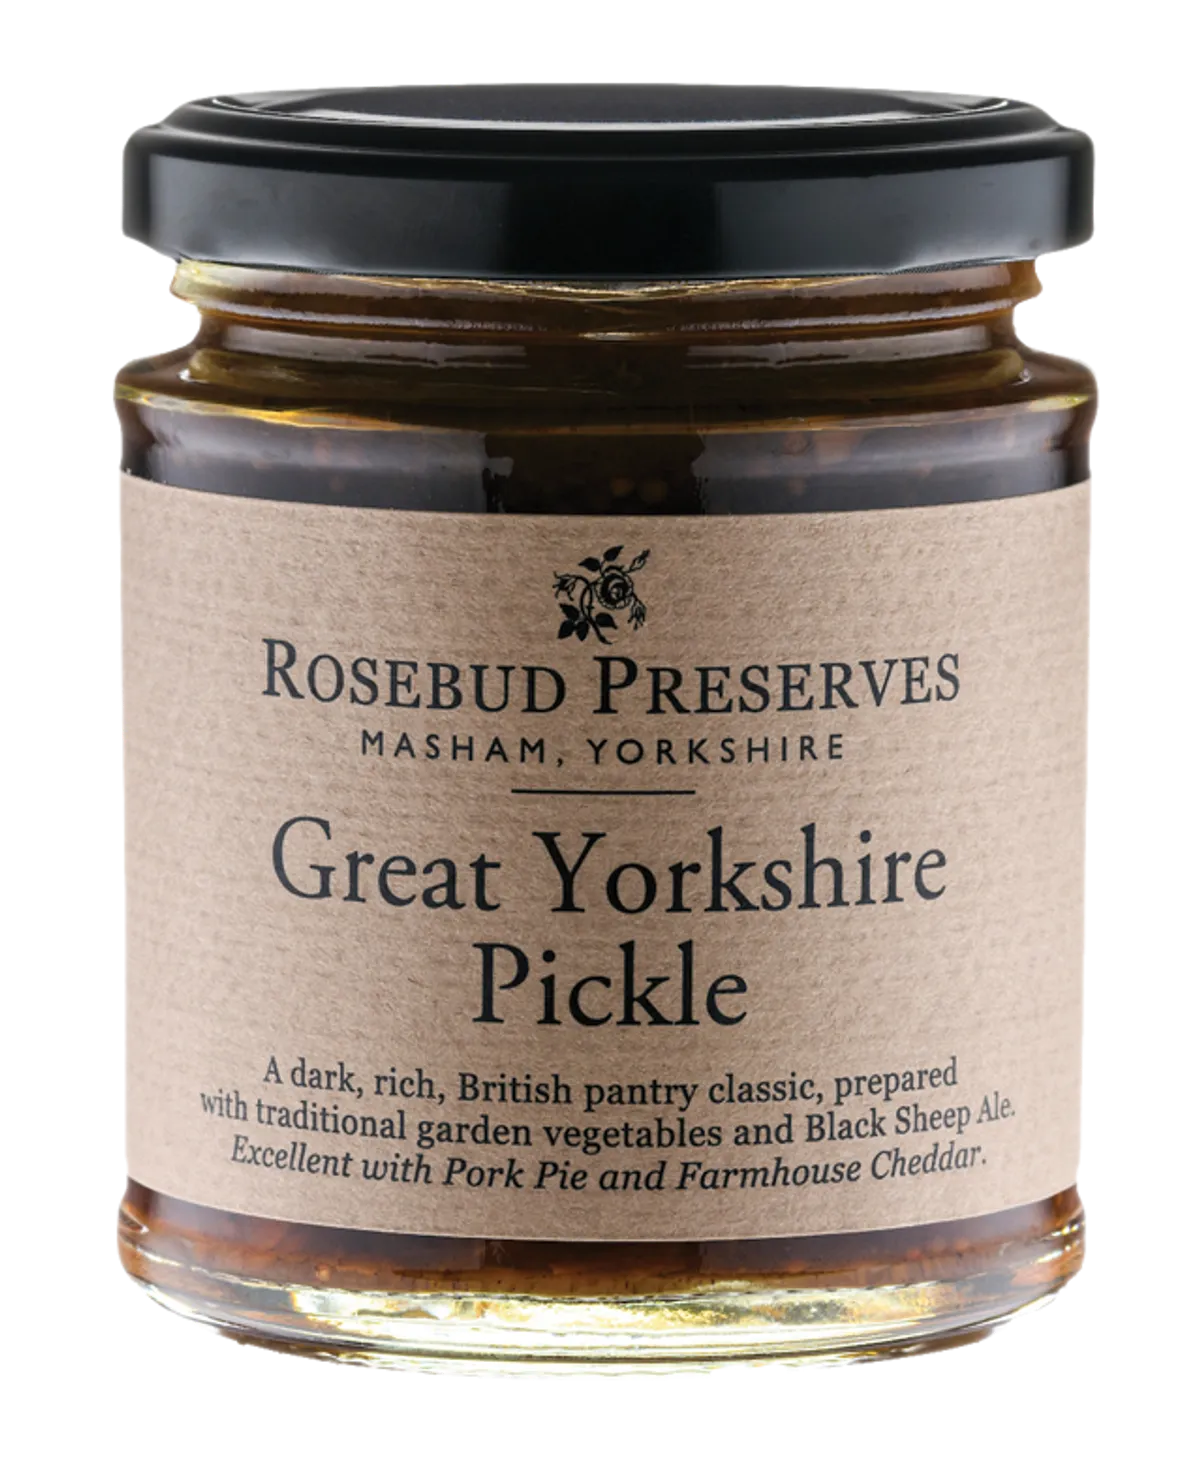 Yorkshire Pickle